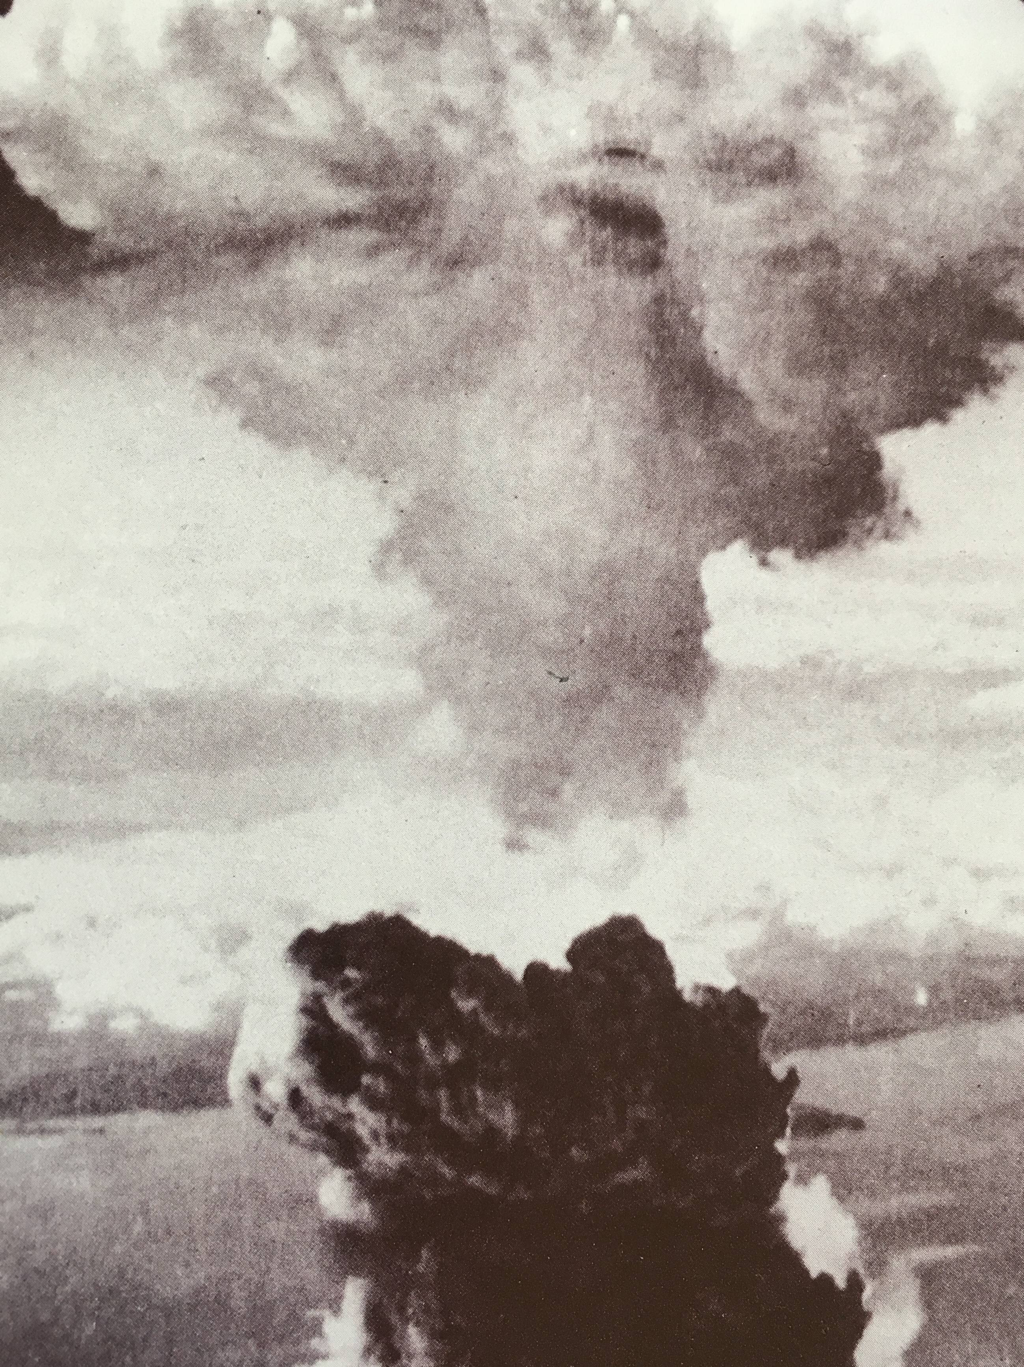 explosion of the second atomic bomb on Nagasaki